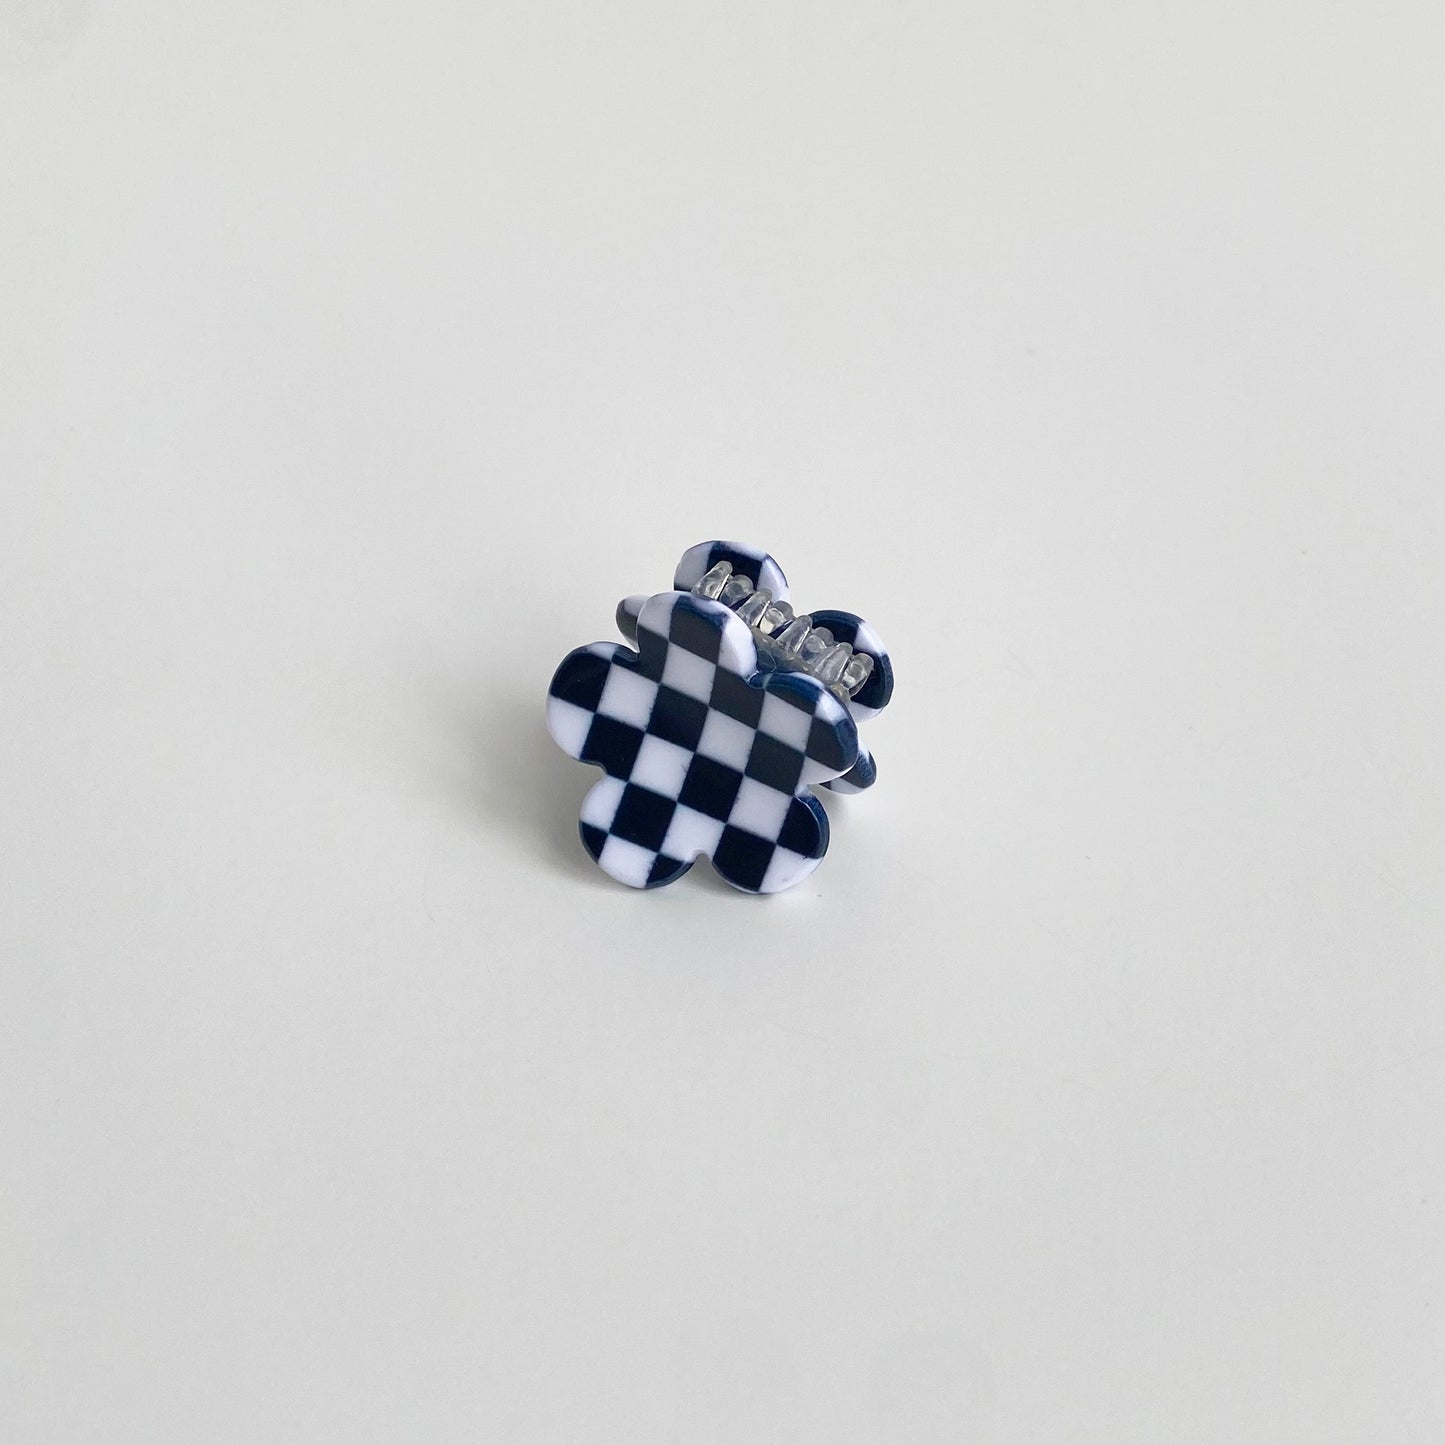 Checkered hair clip in black checkered flower